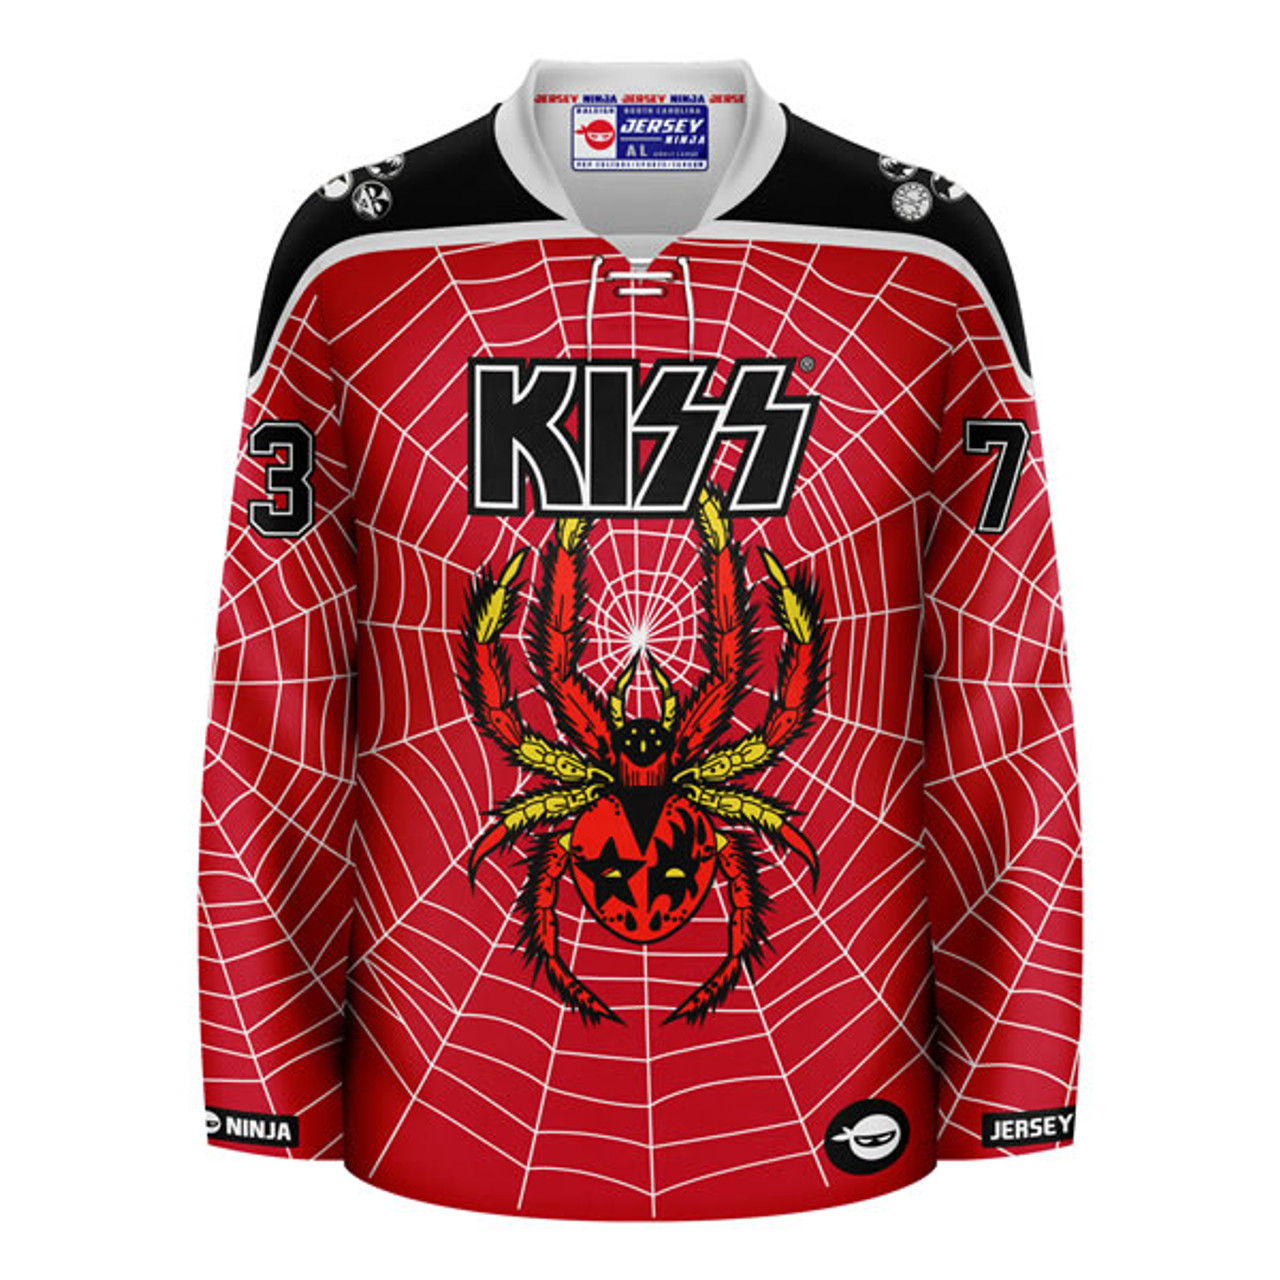 Jersey Ninja - KISS Army Red/Black Hockey Jersey